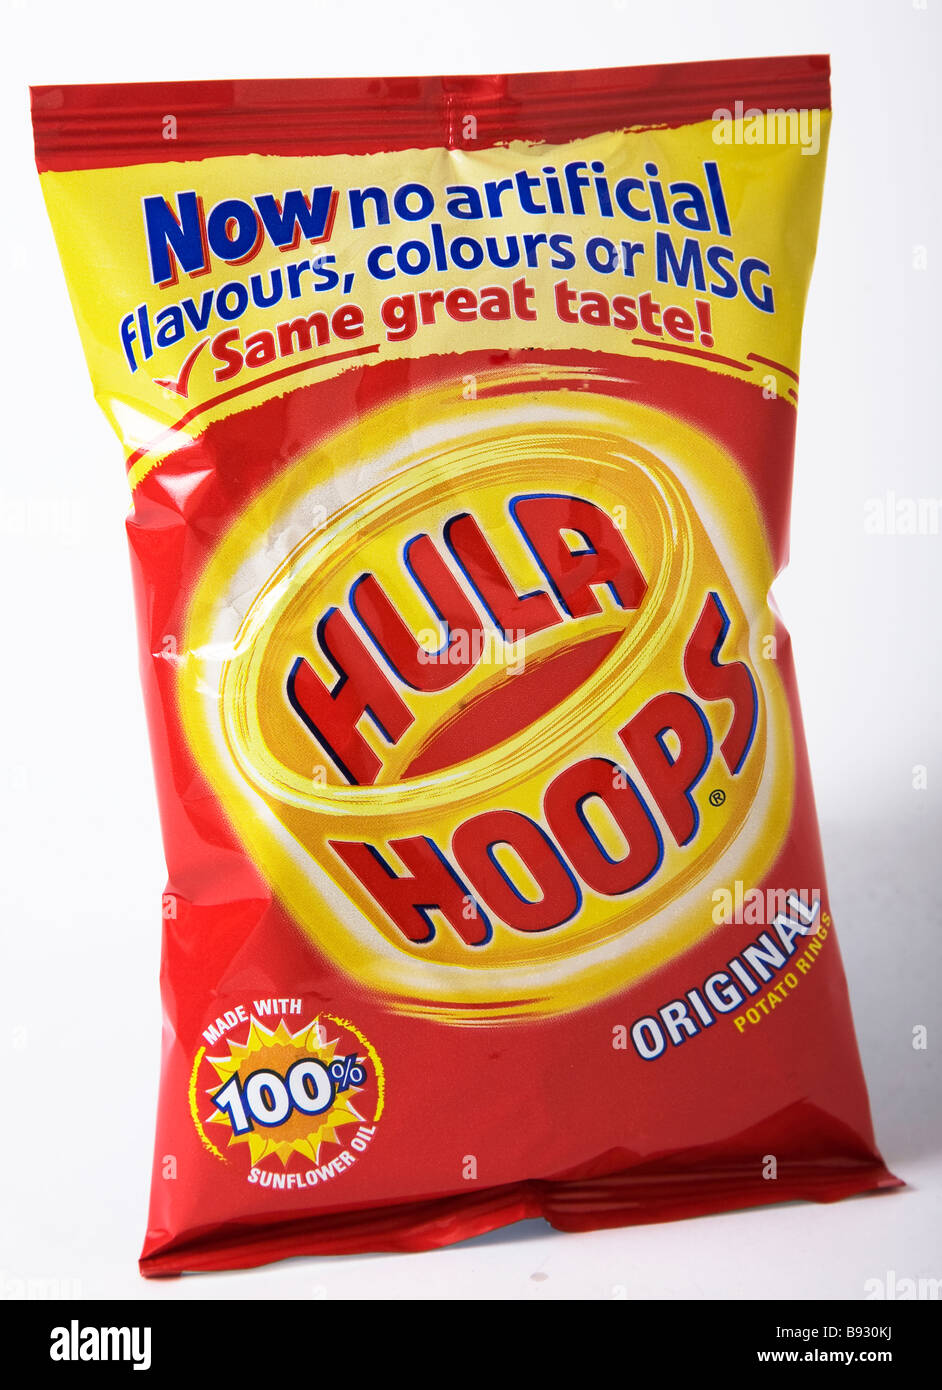 Hula hoops original Chips Stockfoto